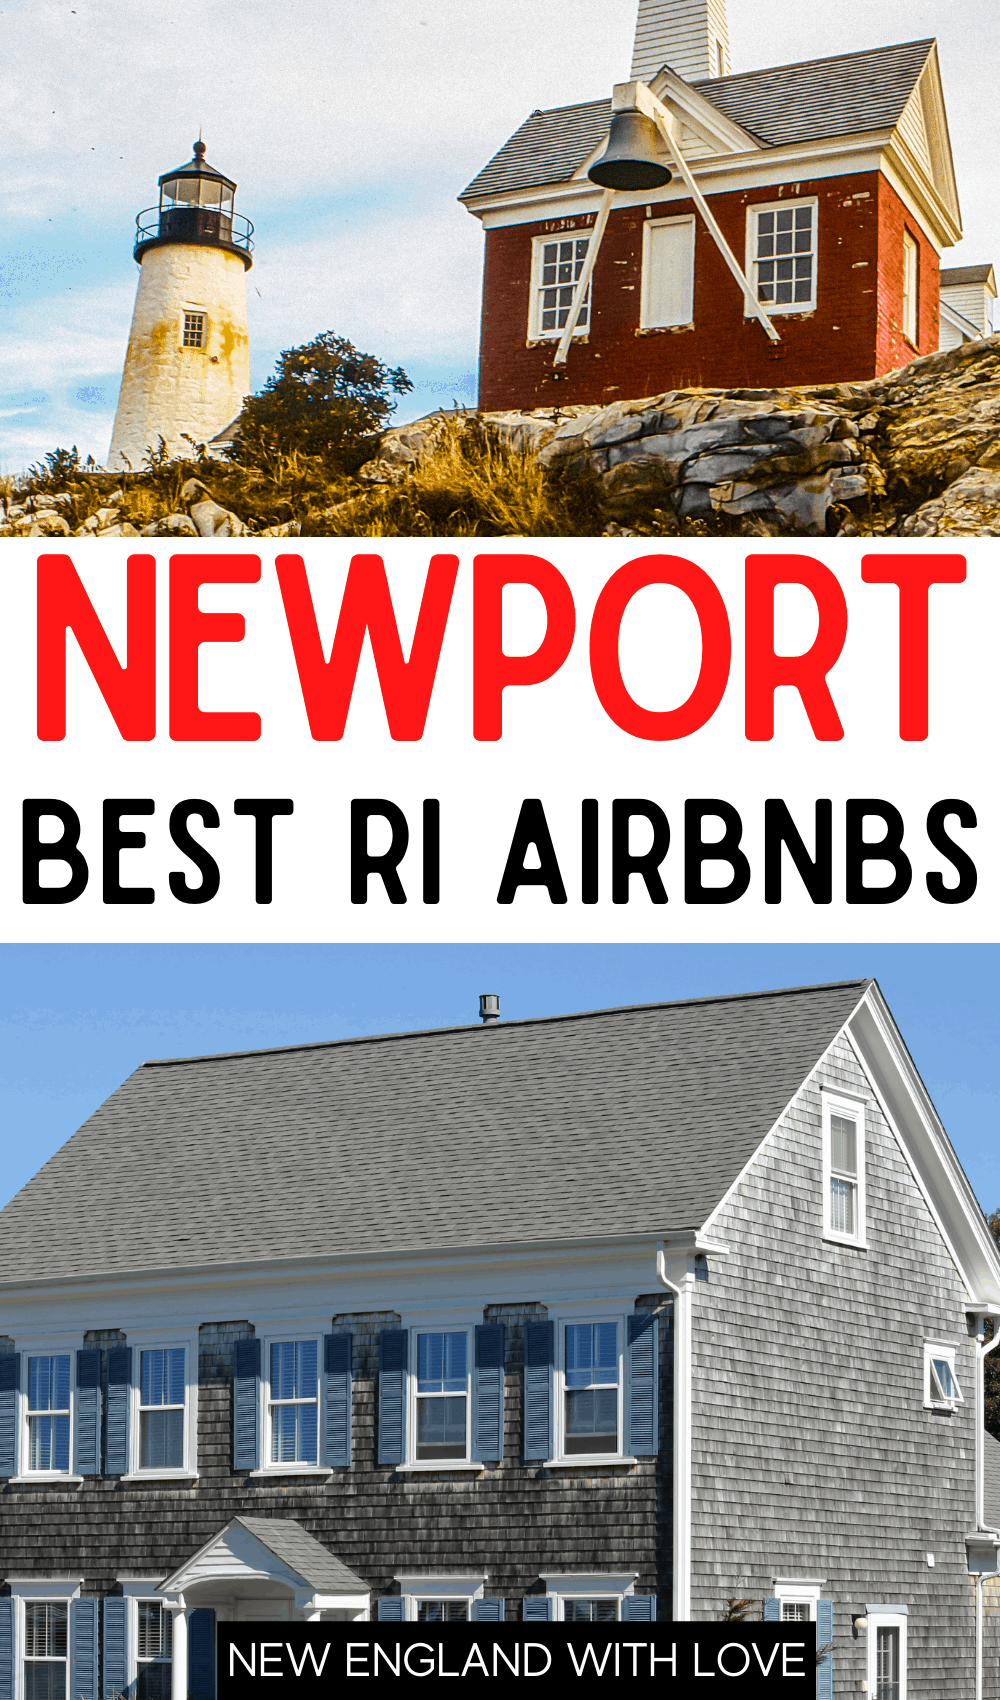 Pinterest graphic reading "NEWPORT BEST RI AIRBNBS"